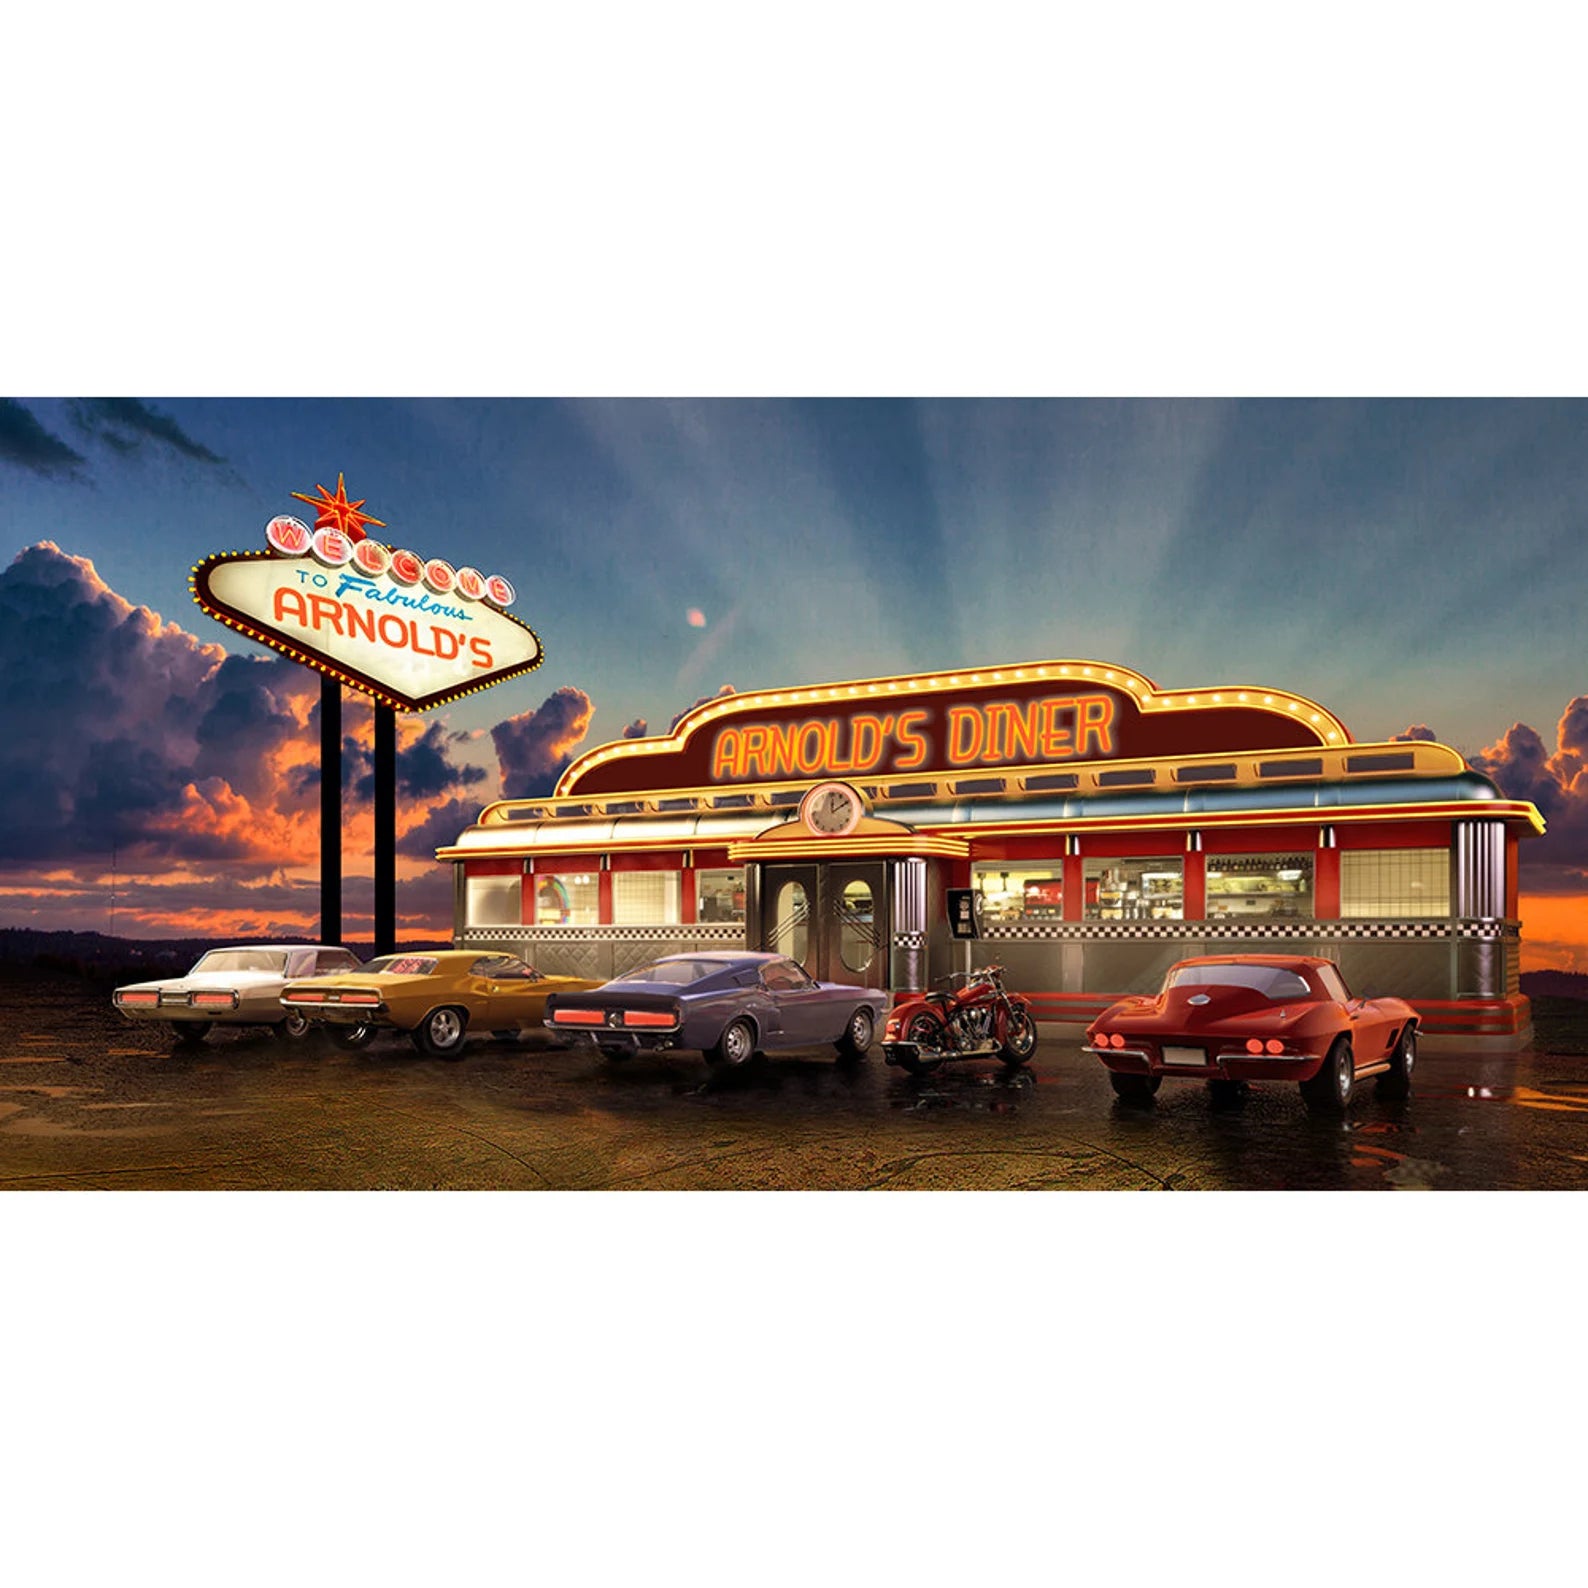 Blue 57 Chevy Diner Photo Backdrop PRO 16x9 - Pro 10 x 20